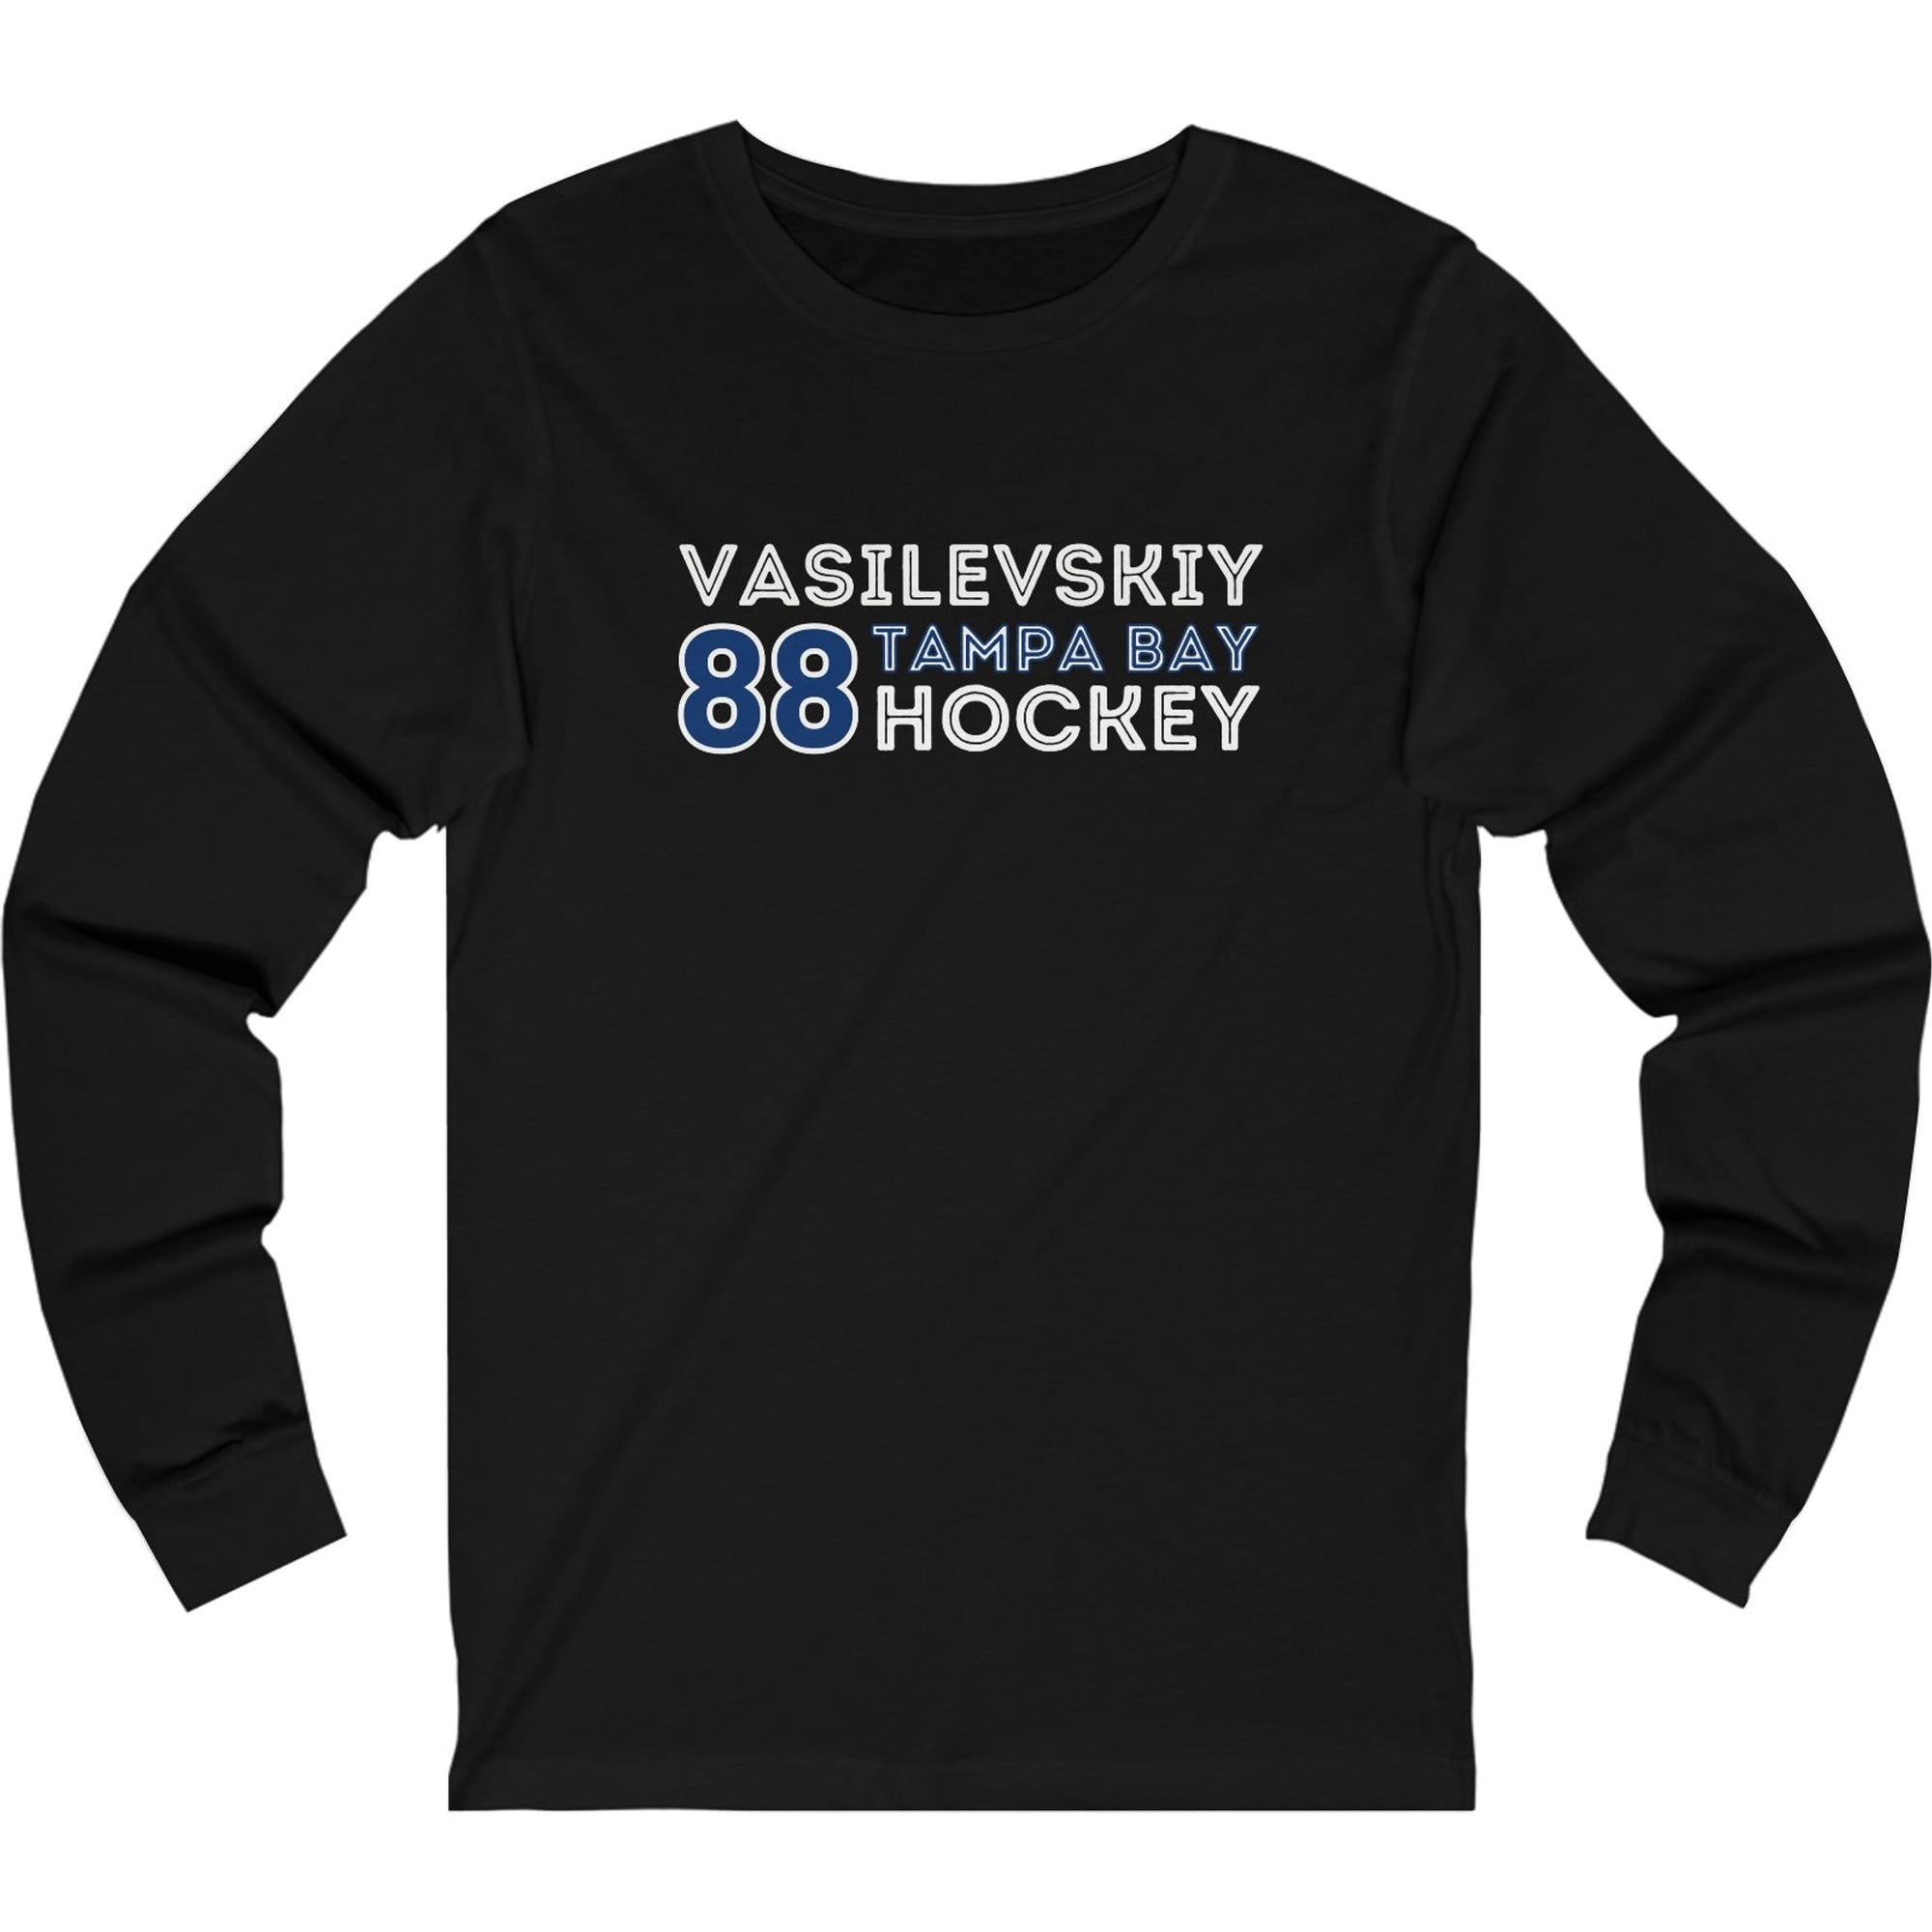 Vasilevskiy 88 Tampa Bay Hockey Grafitti Wall Design Unisex Jersey Long Sleeve Shirt